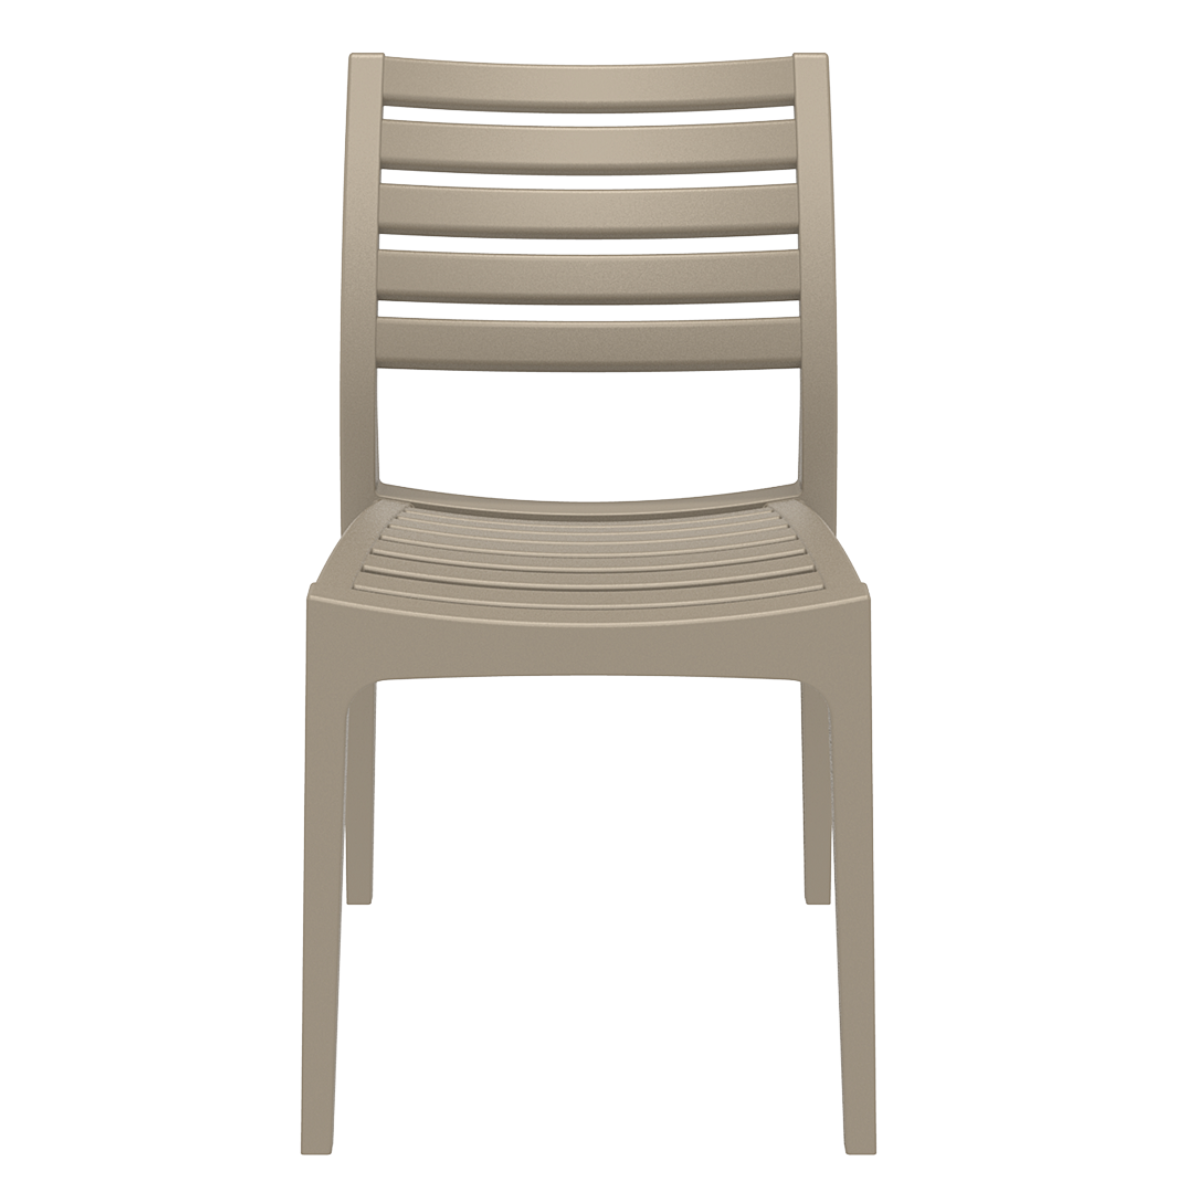 ST ARES Taupe design Műanyag kültéri szék